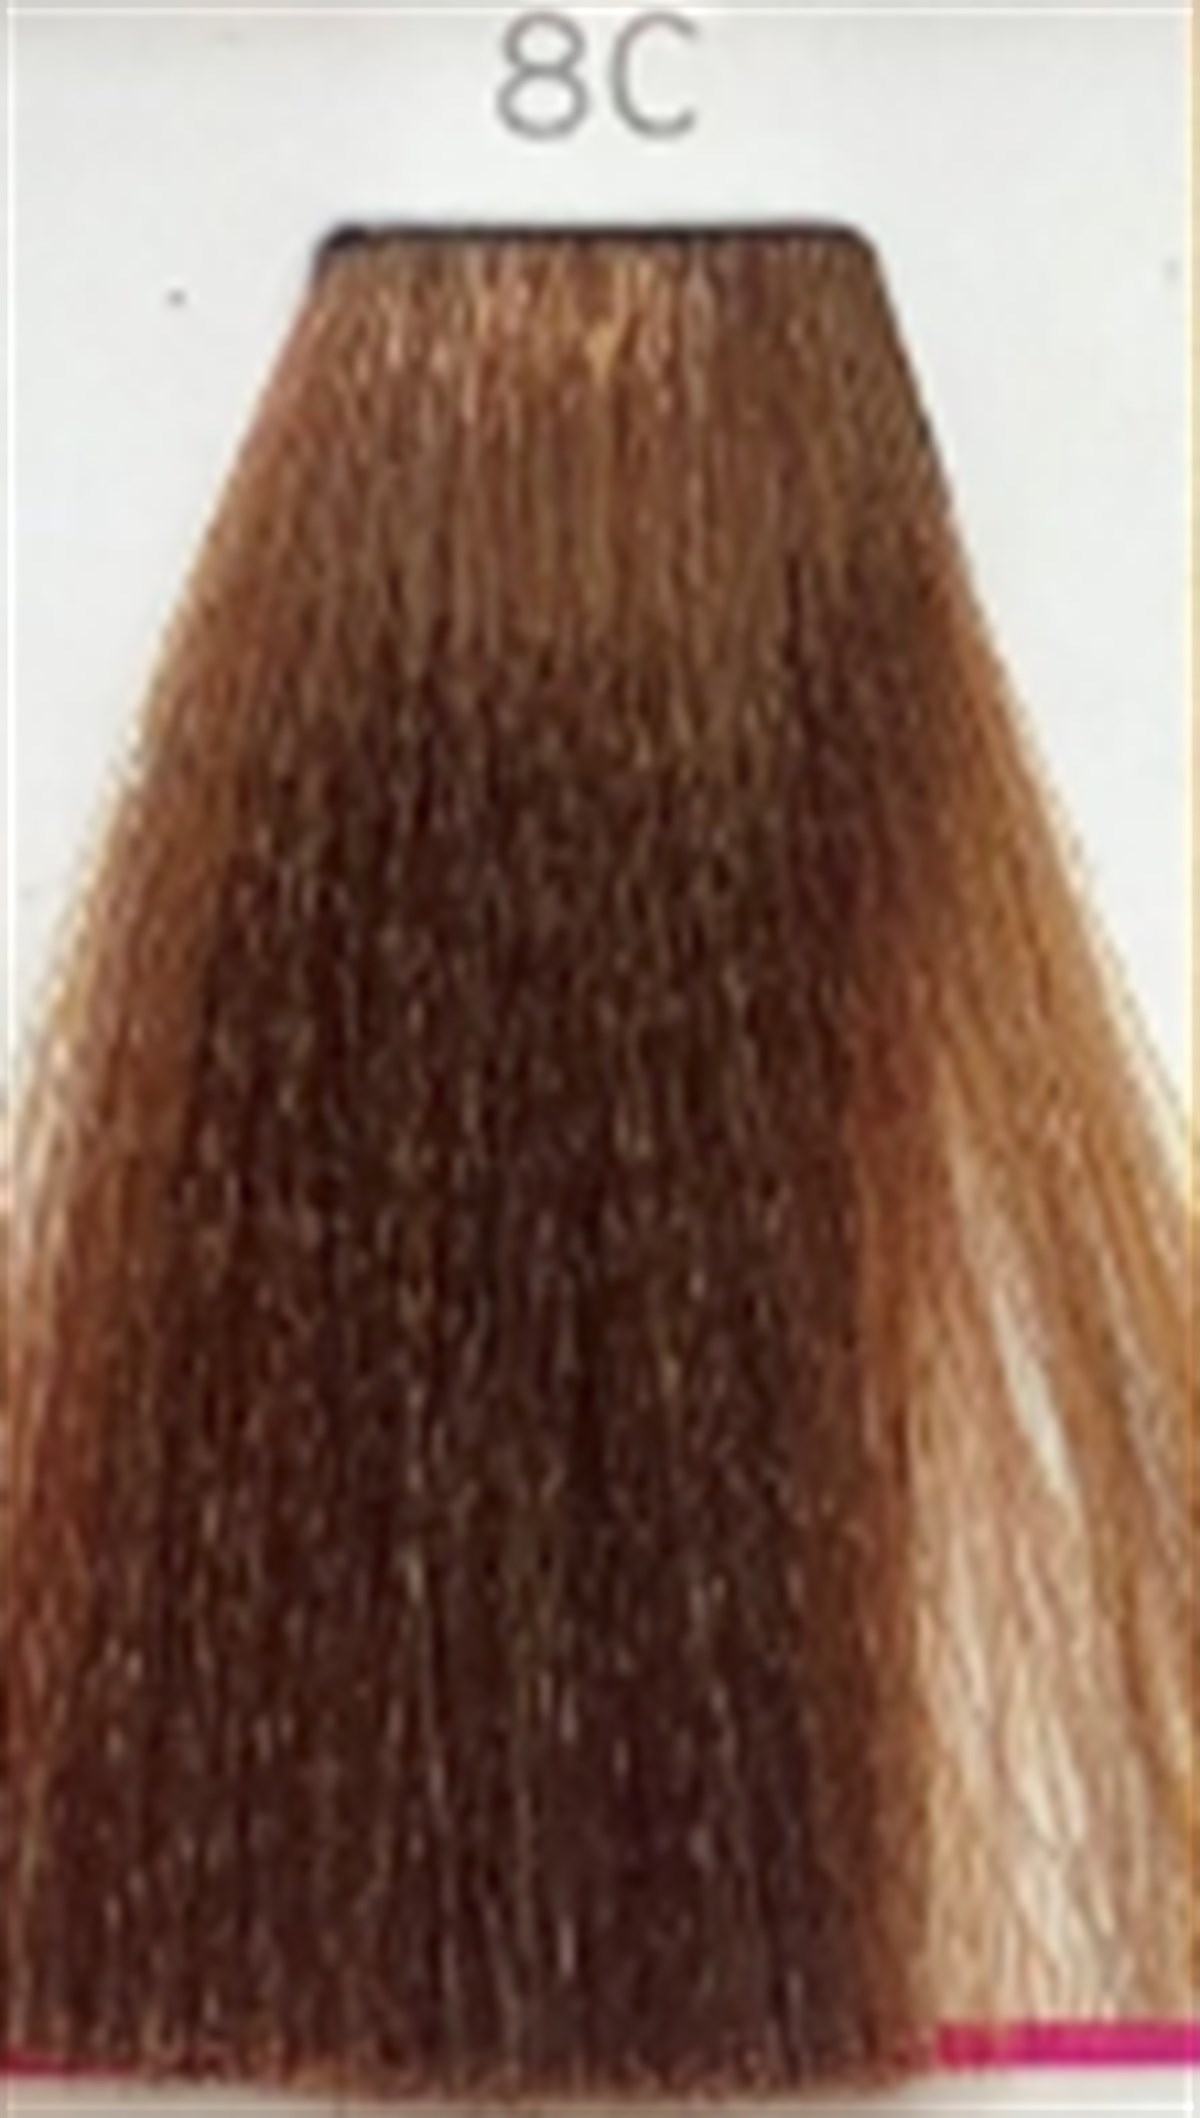 matrix saç boyası 8CMATRİX SAÇ BOYASI-www.arzumkozmetik.com